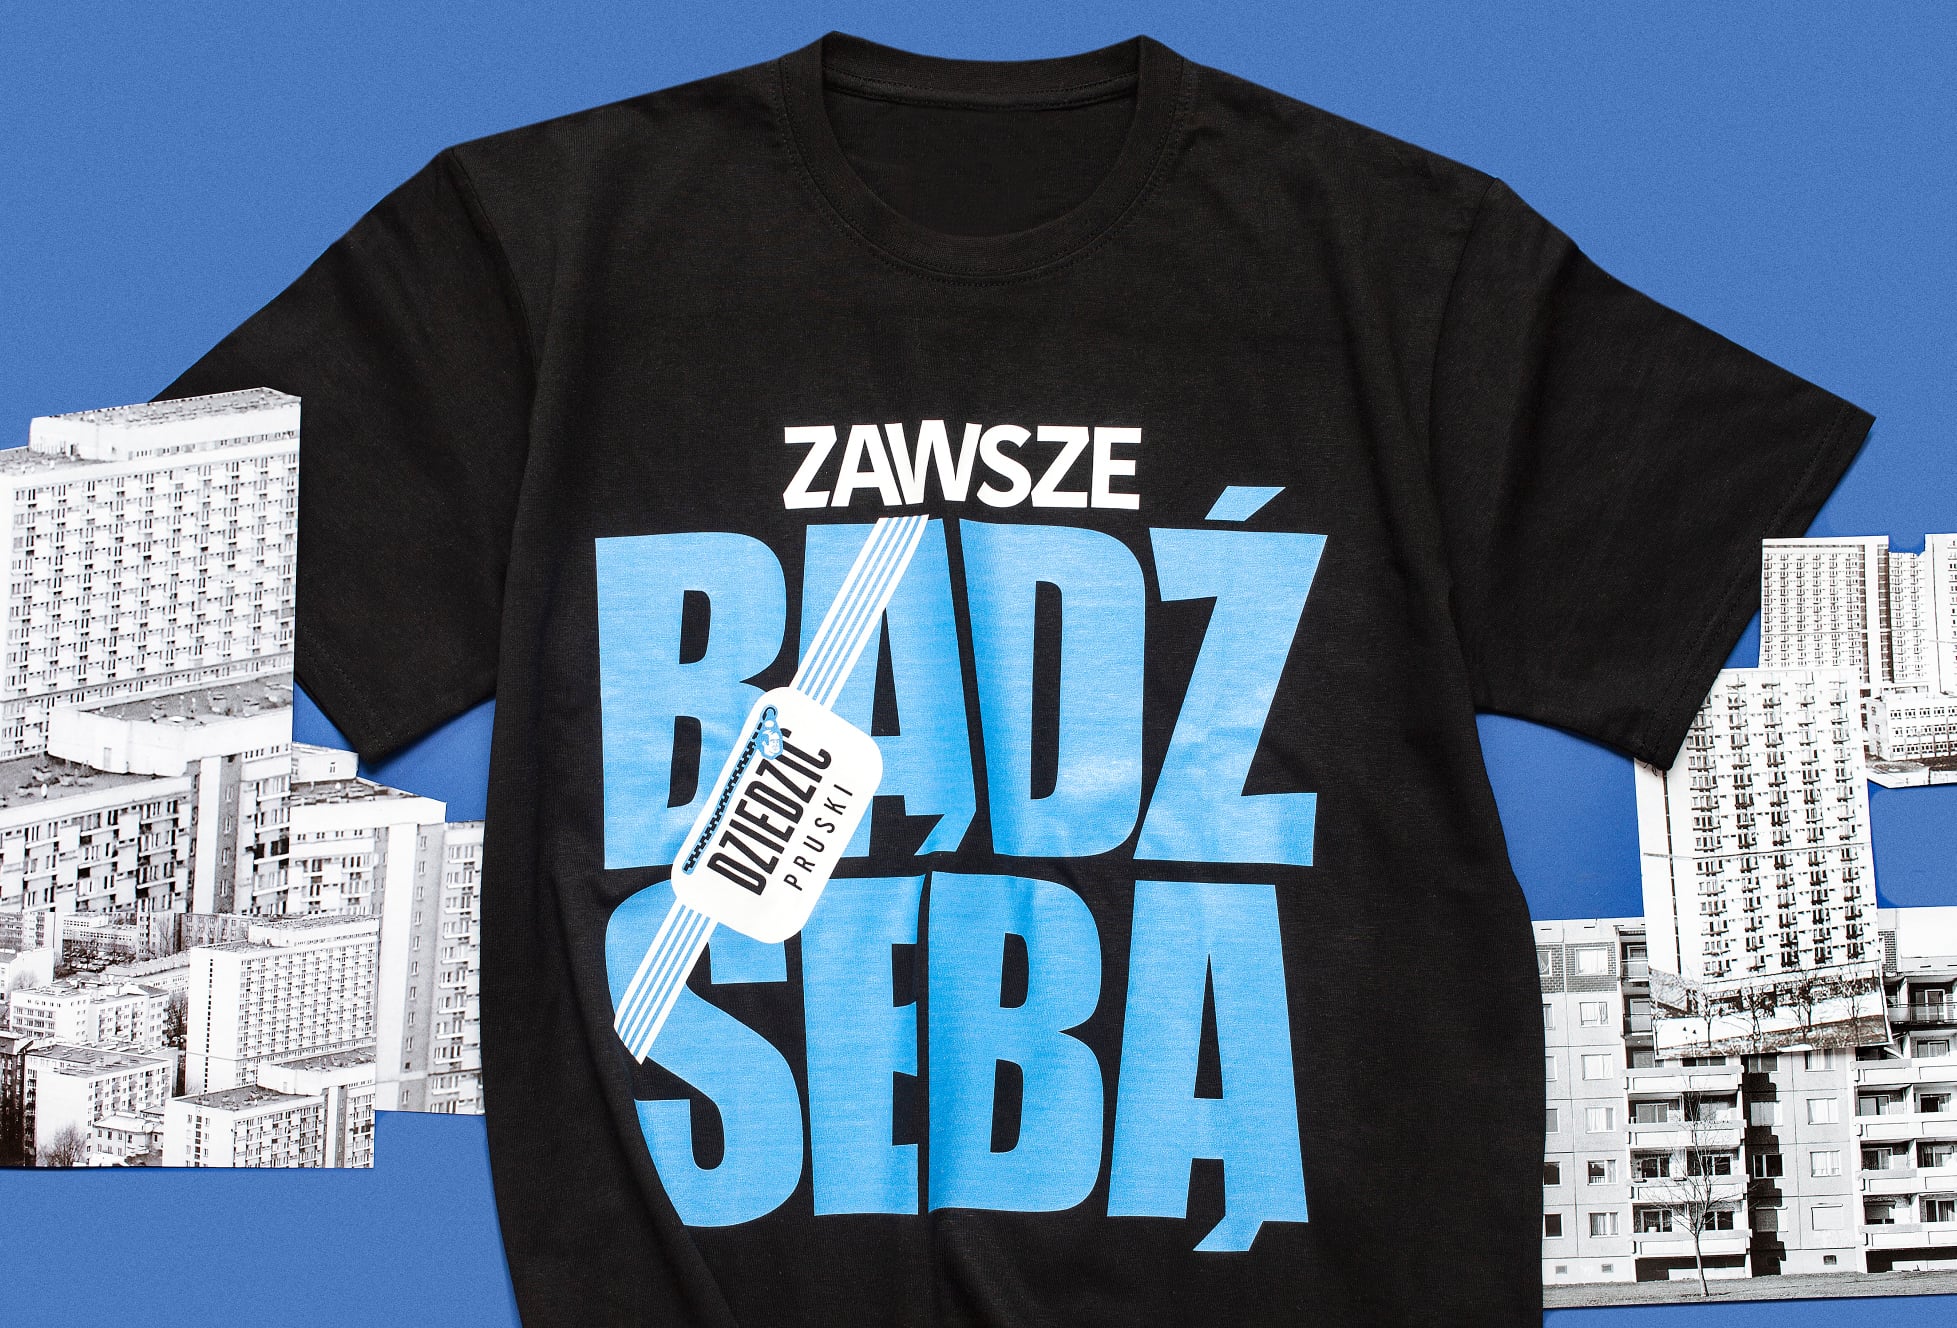 Zawsze - Badz Seba